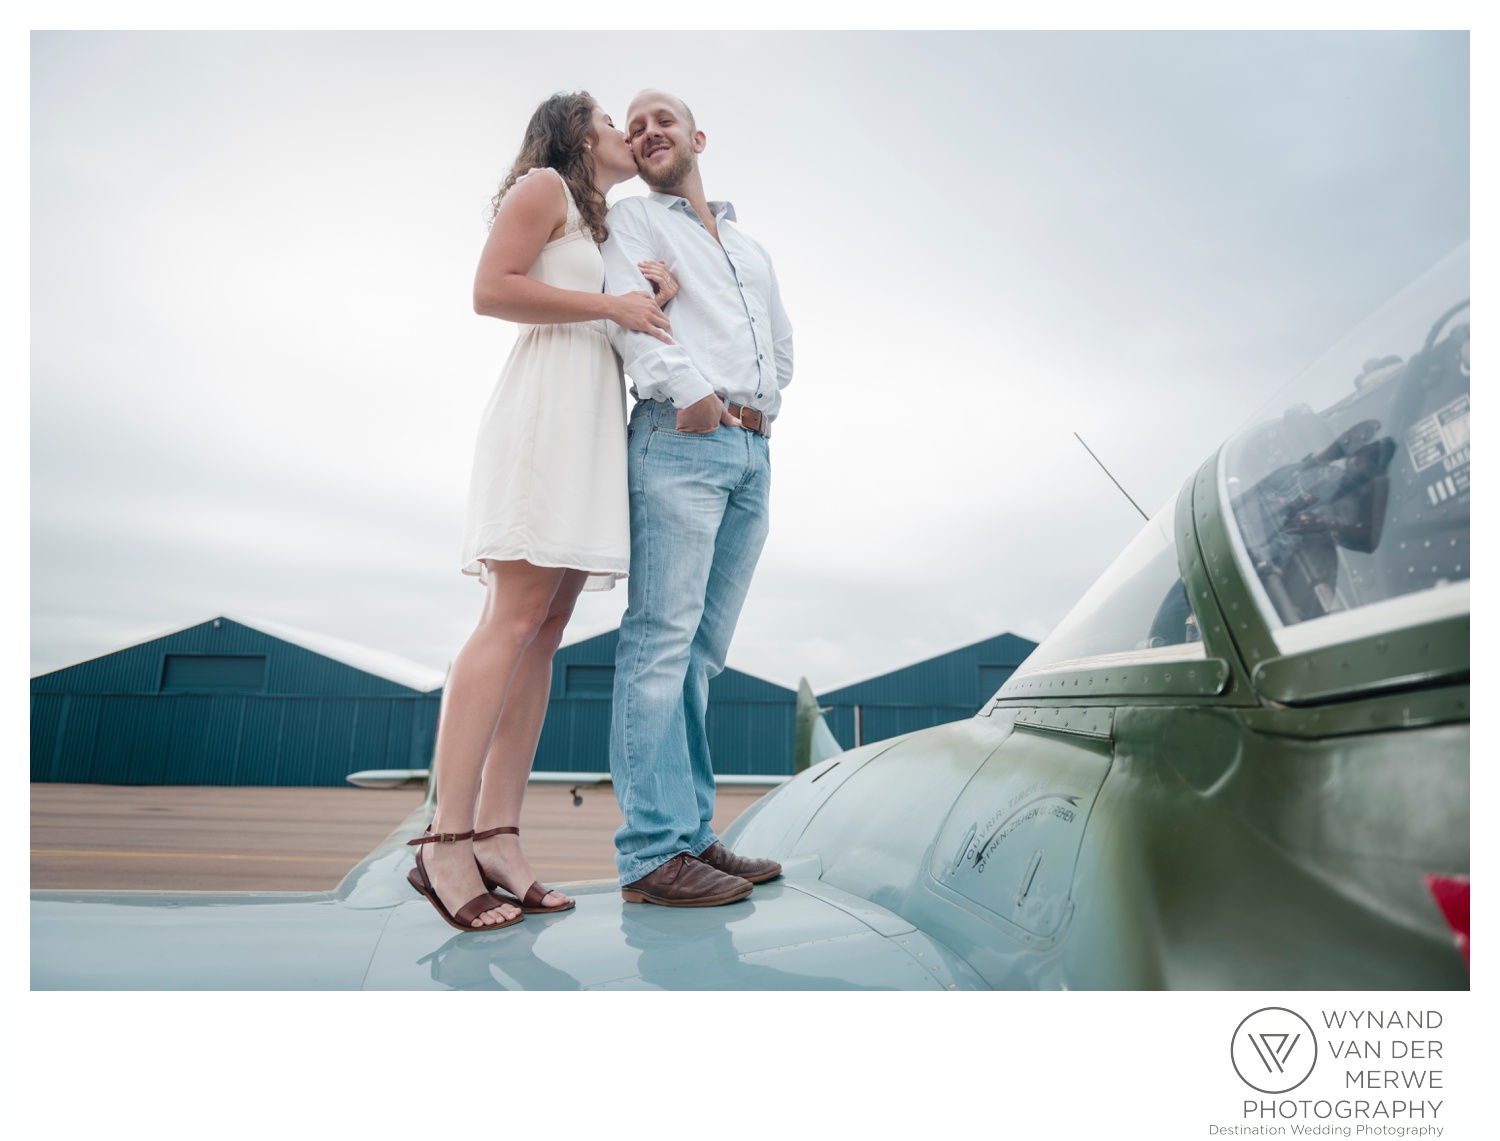 WynandvanderMerwe_weddingphotography_engagementshoot_wonderboomairport_aeroplane_klaasjanmareli_gauteng_2018-3.jpg